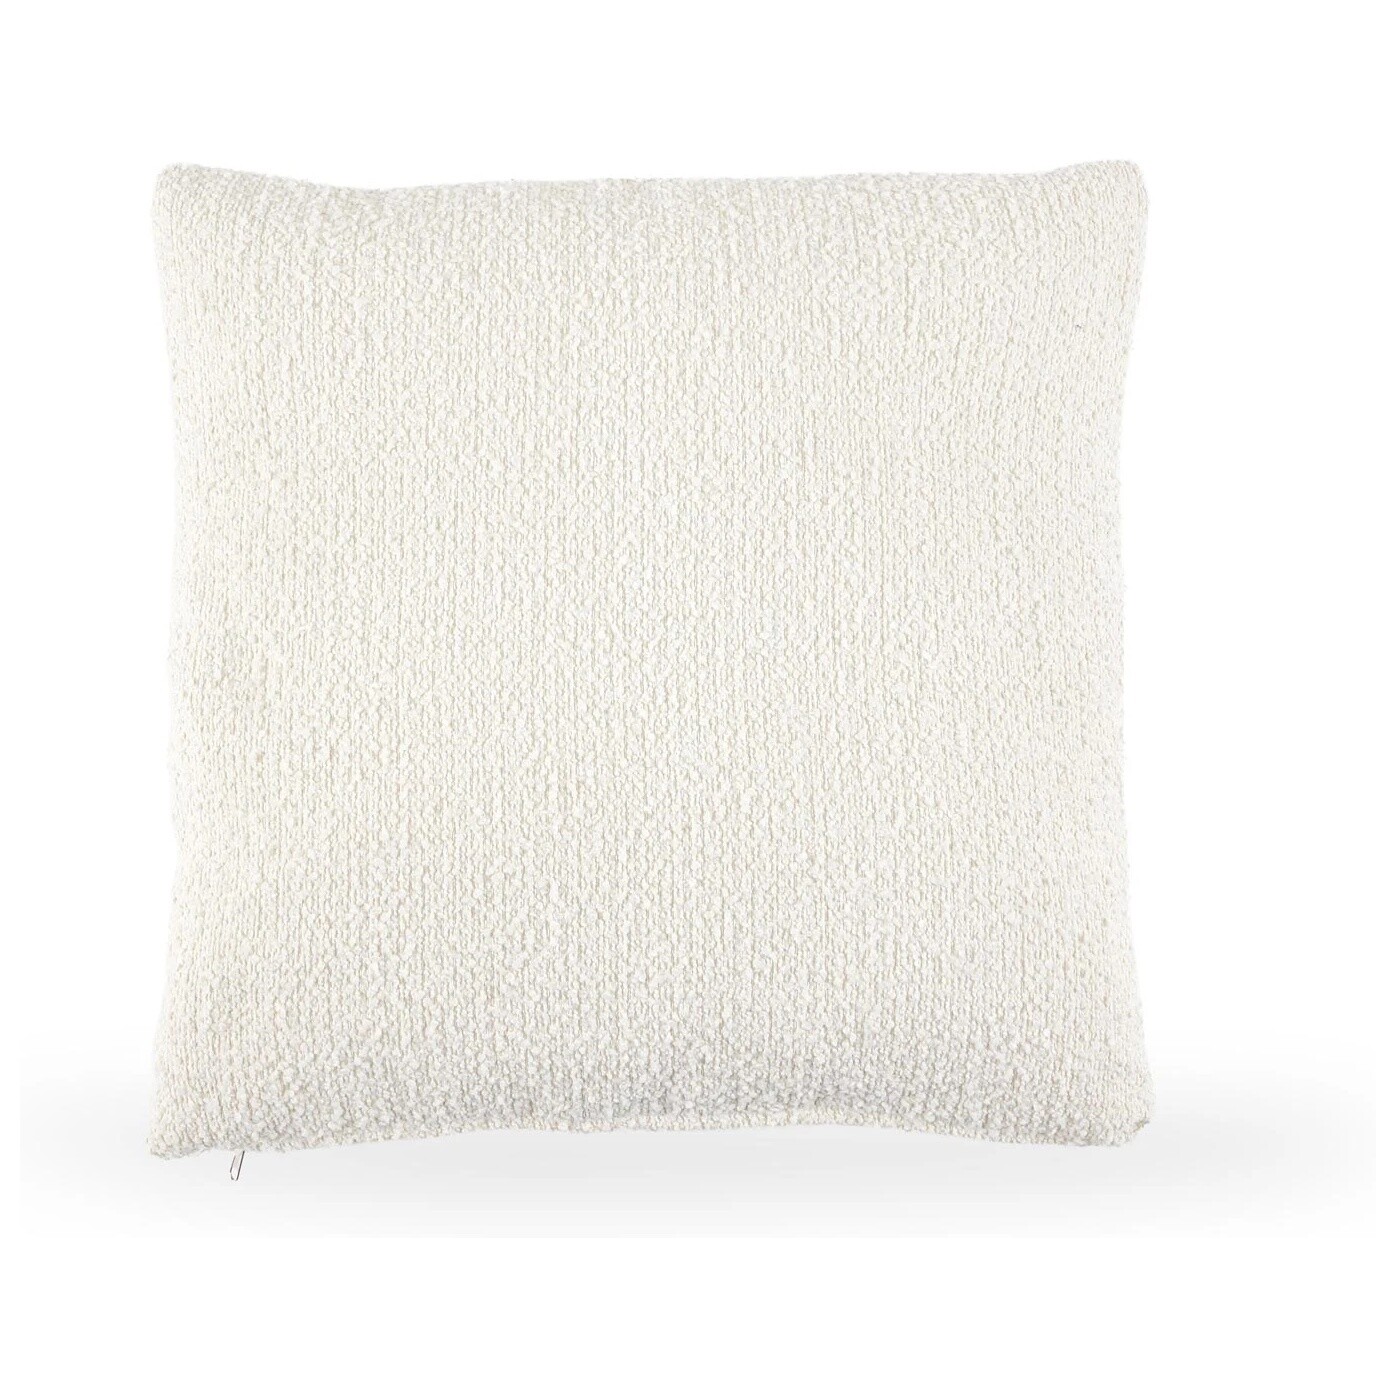 Подушка квадратная 60 см ткань Buckle white белая Fabro